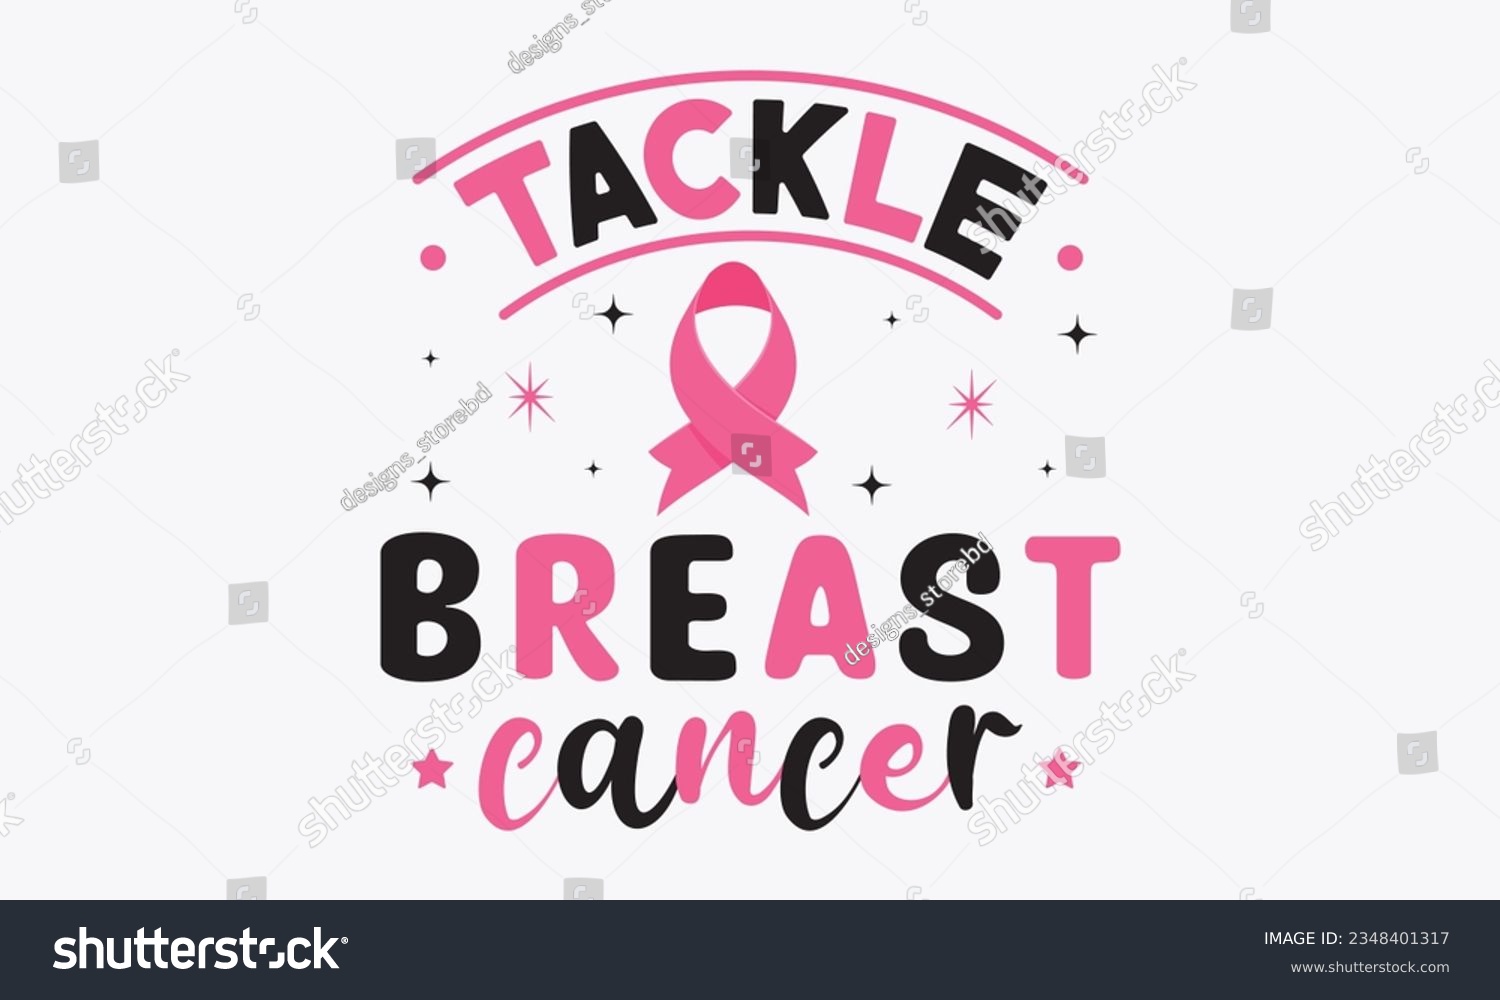 SVG of Tackle breast cancer svg, Breast Cancer SVG design, Cancer Awareness, Instant Download, Breast Ribbon svg, cut files, Cricut, Silhouette, Breast Cancer t shirt design Quote bundle svg